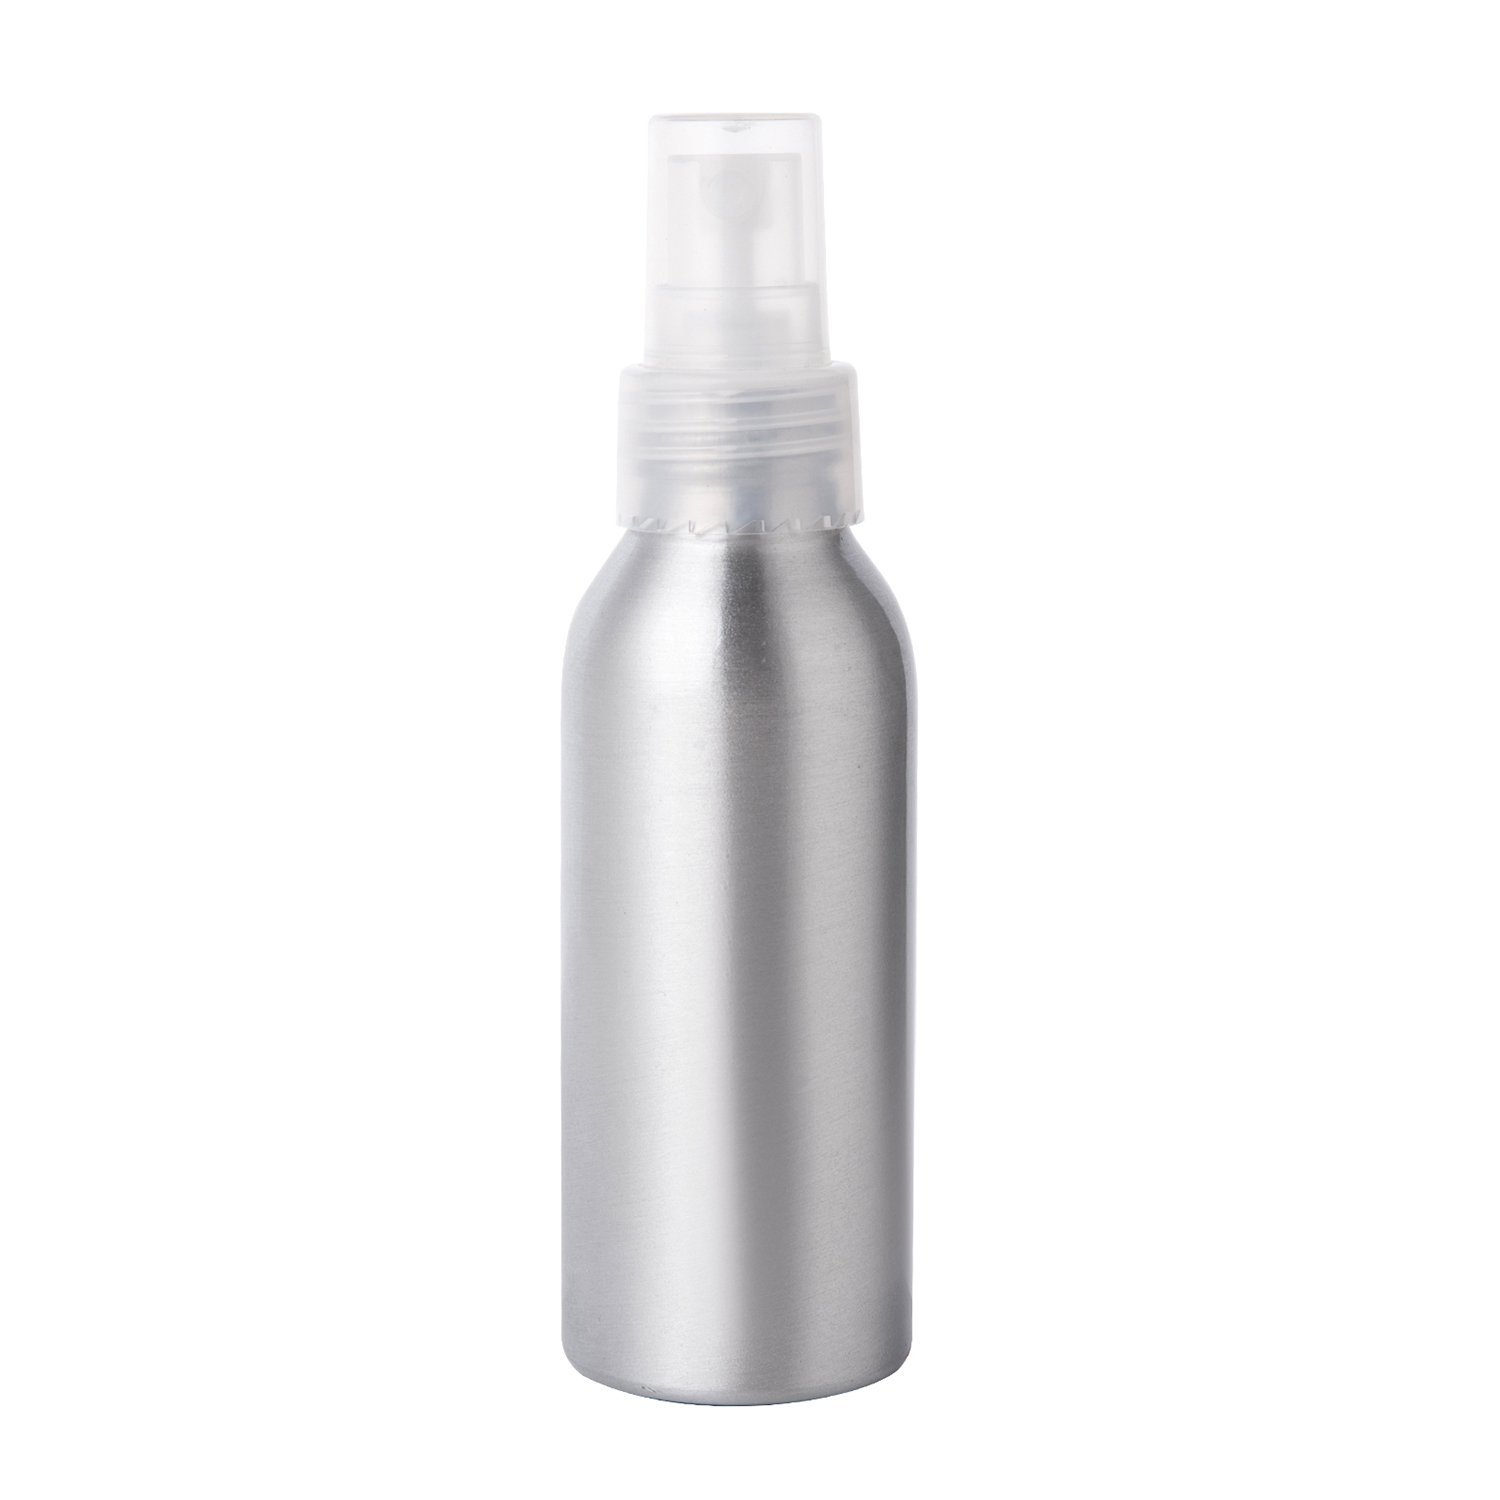 Aluminium Bottle Spray Bottle Cosmetic Bottles